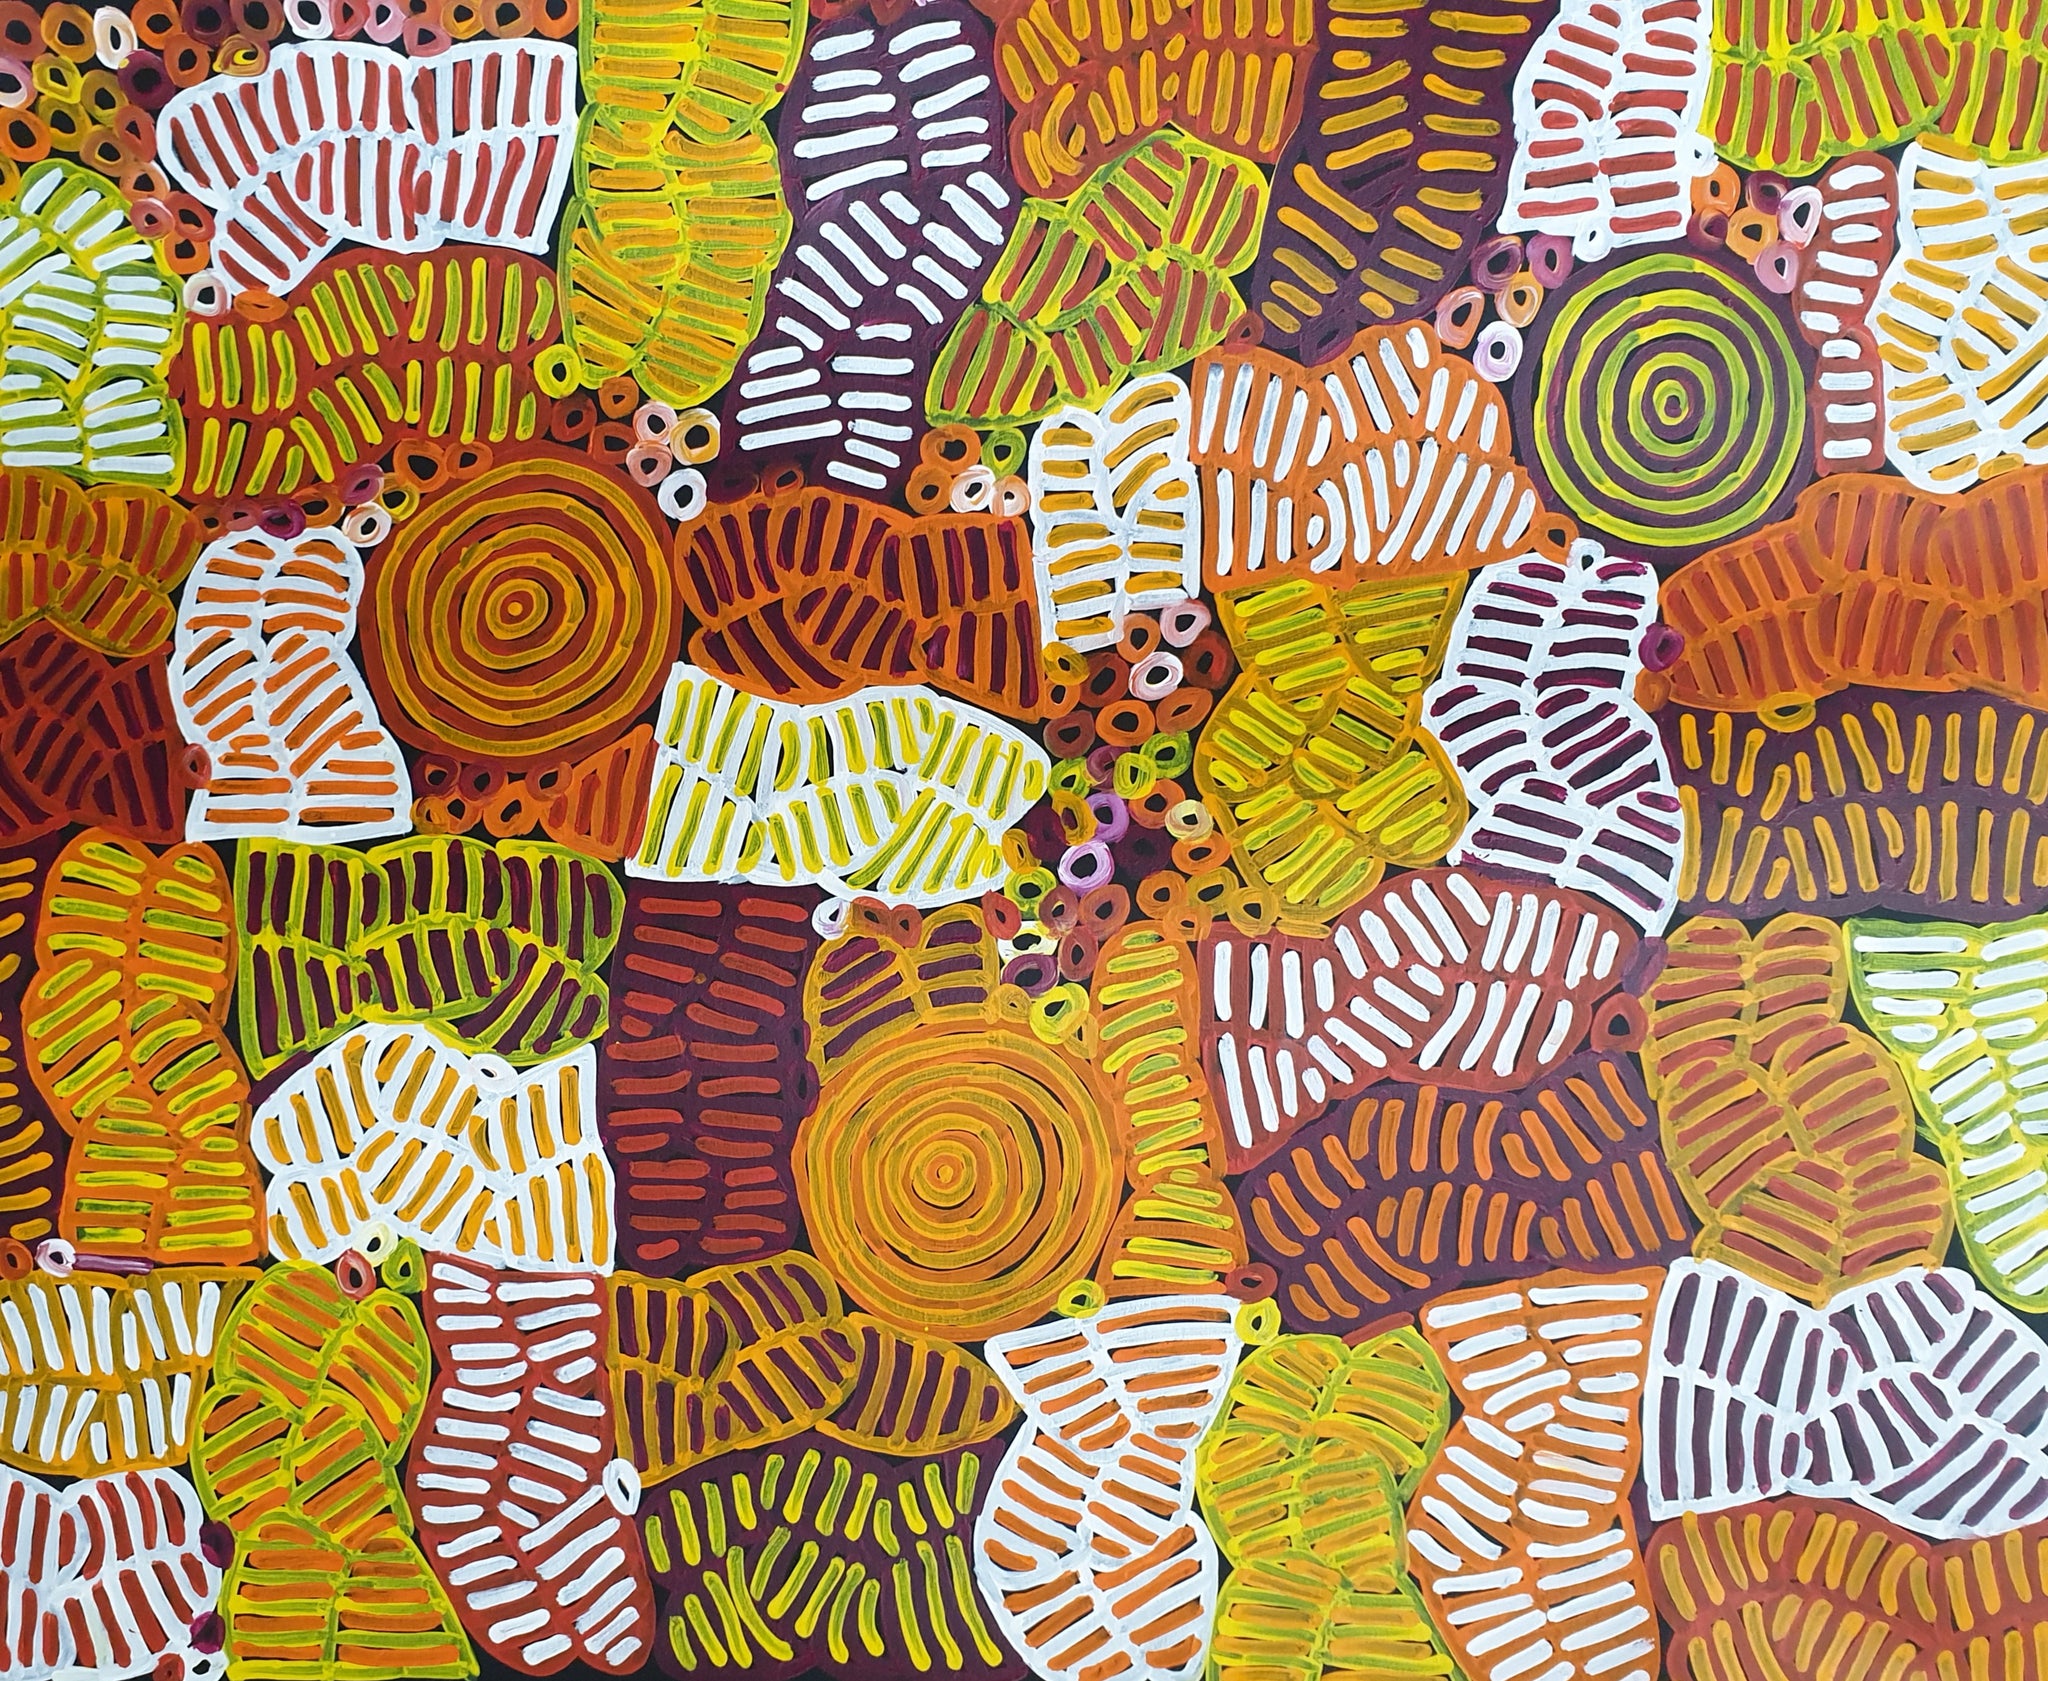 "Awelye & Bush Melons" by Betty Mbitjana Pwerle